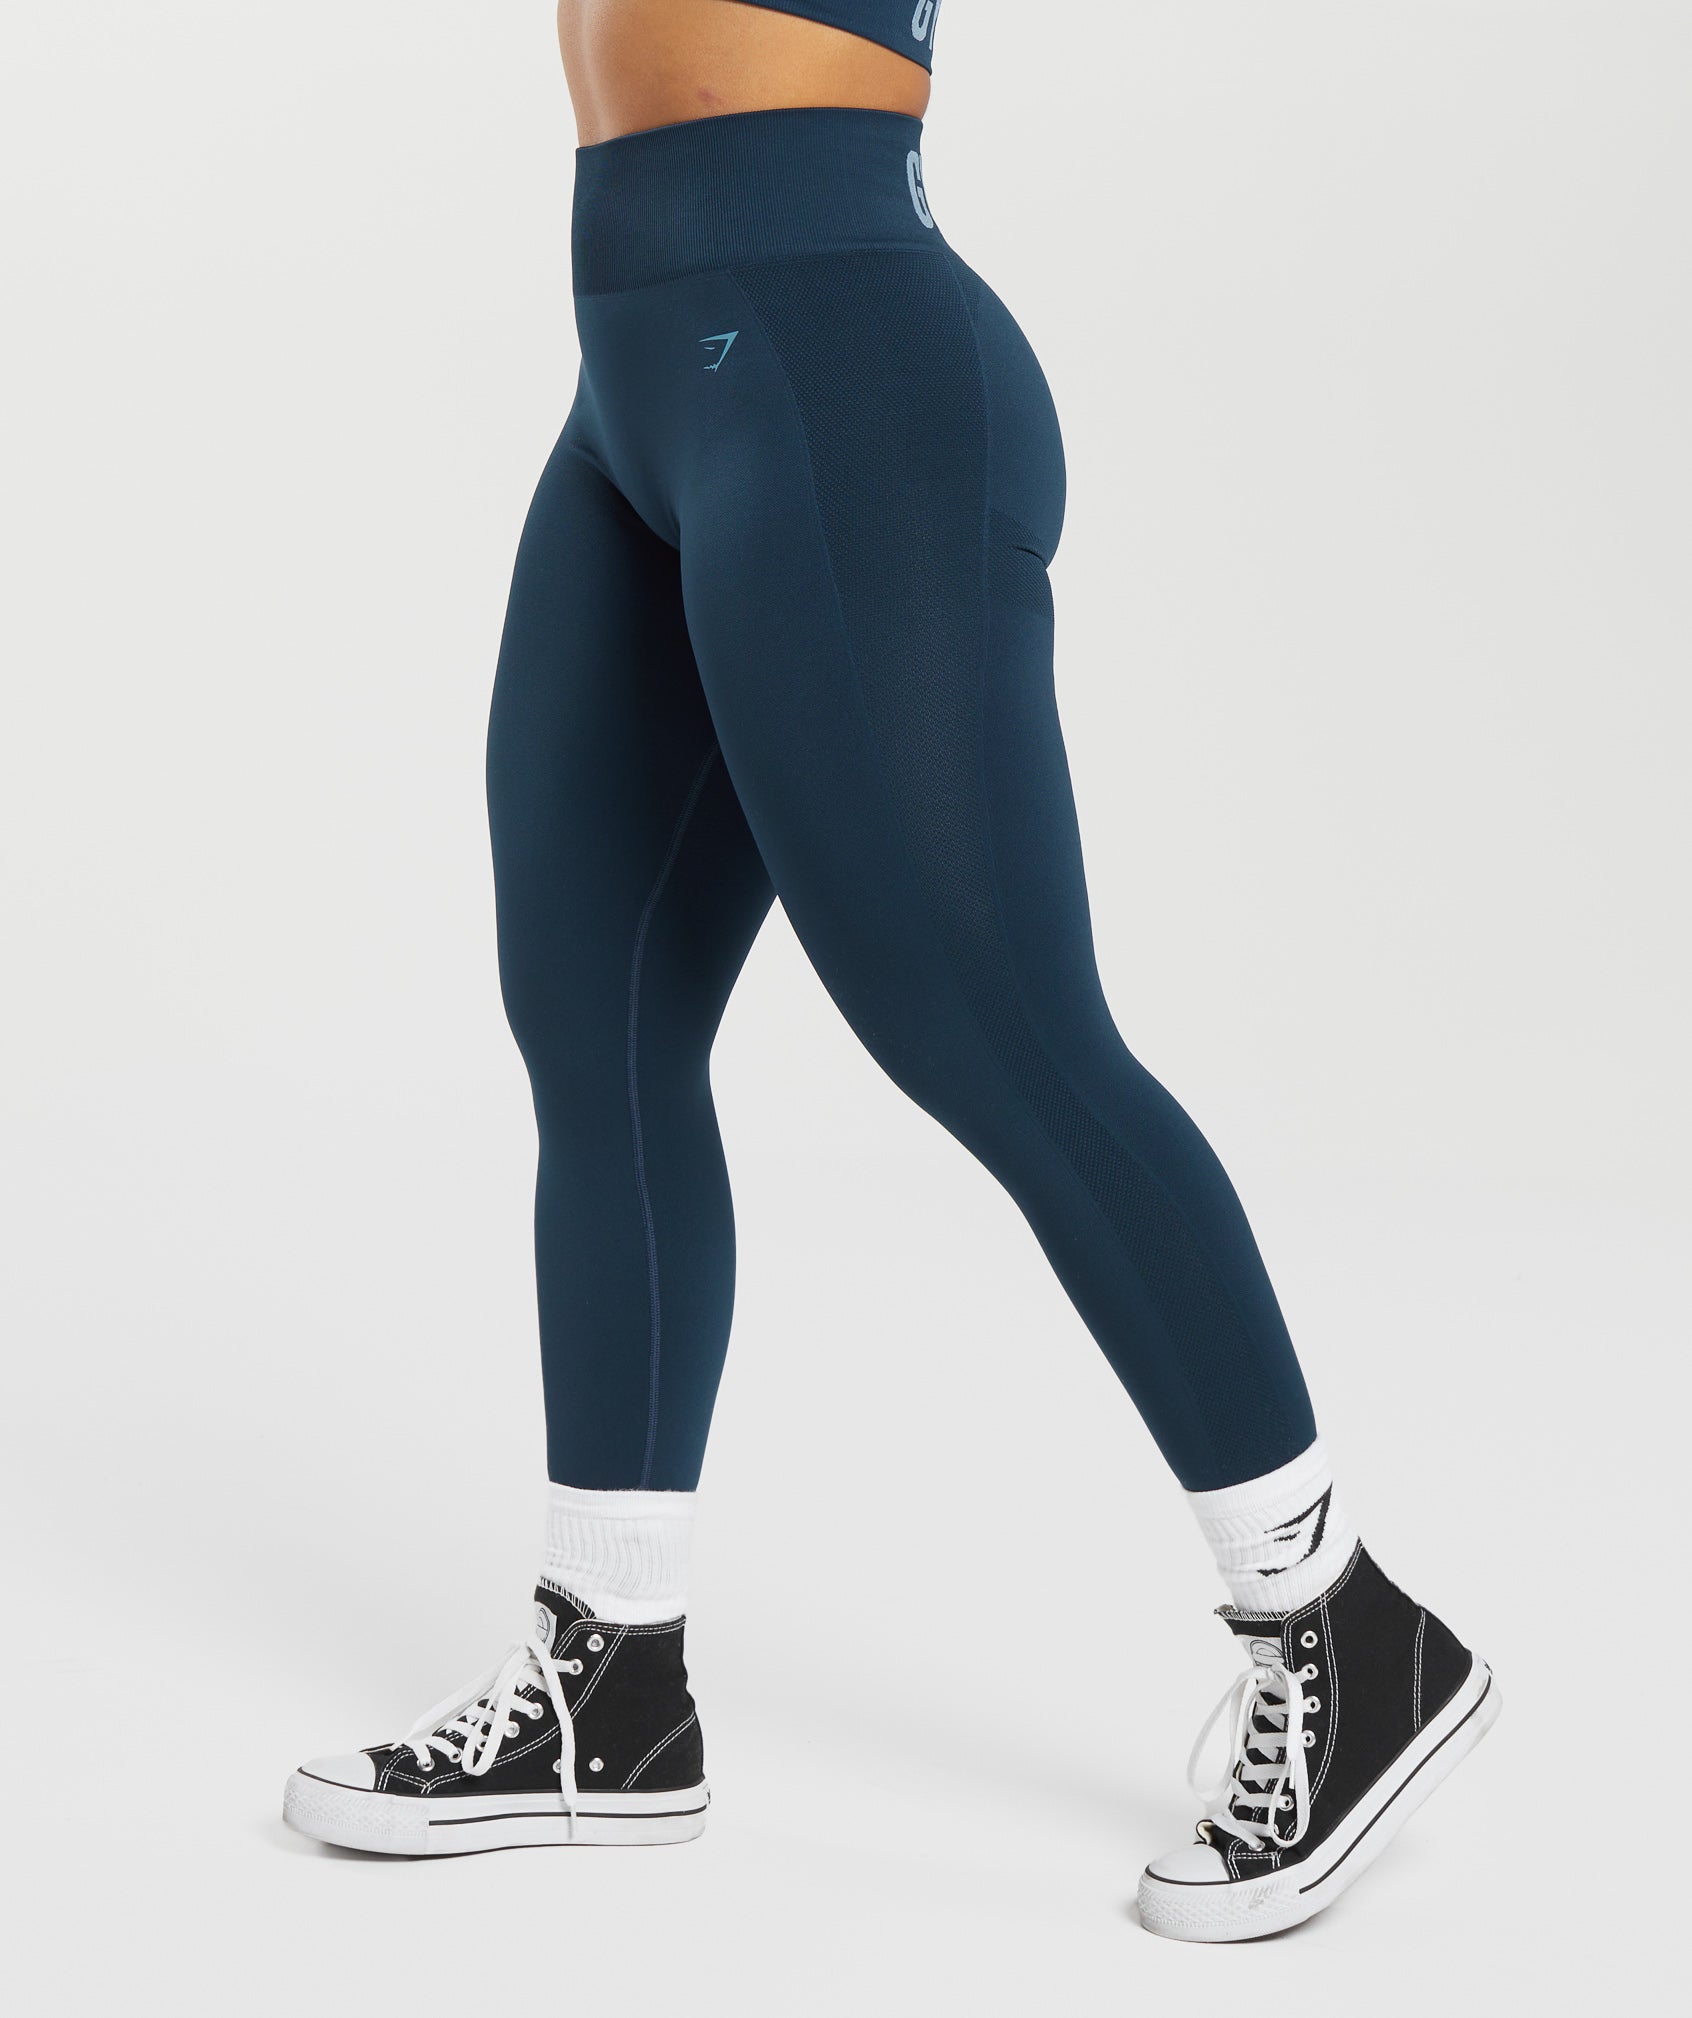 EUC Gymshark Flex High-waisted leggings, grey and blue, size small, high  rise